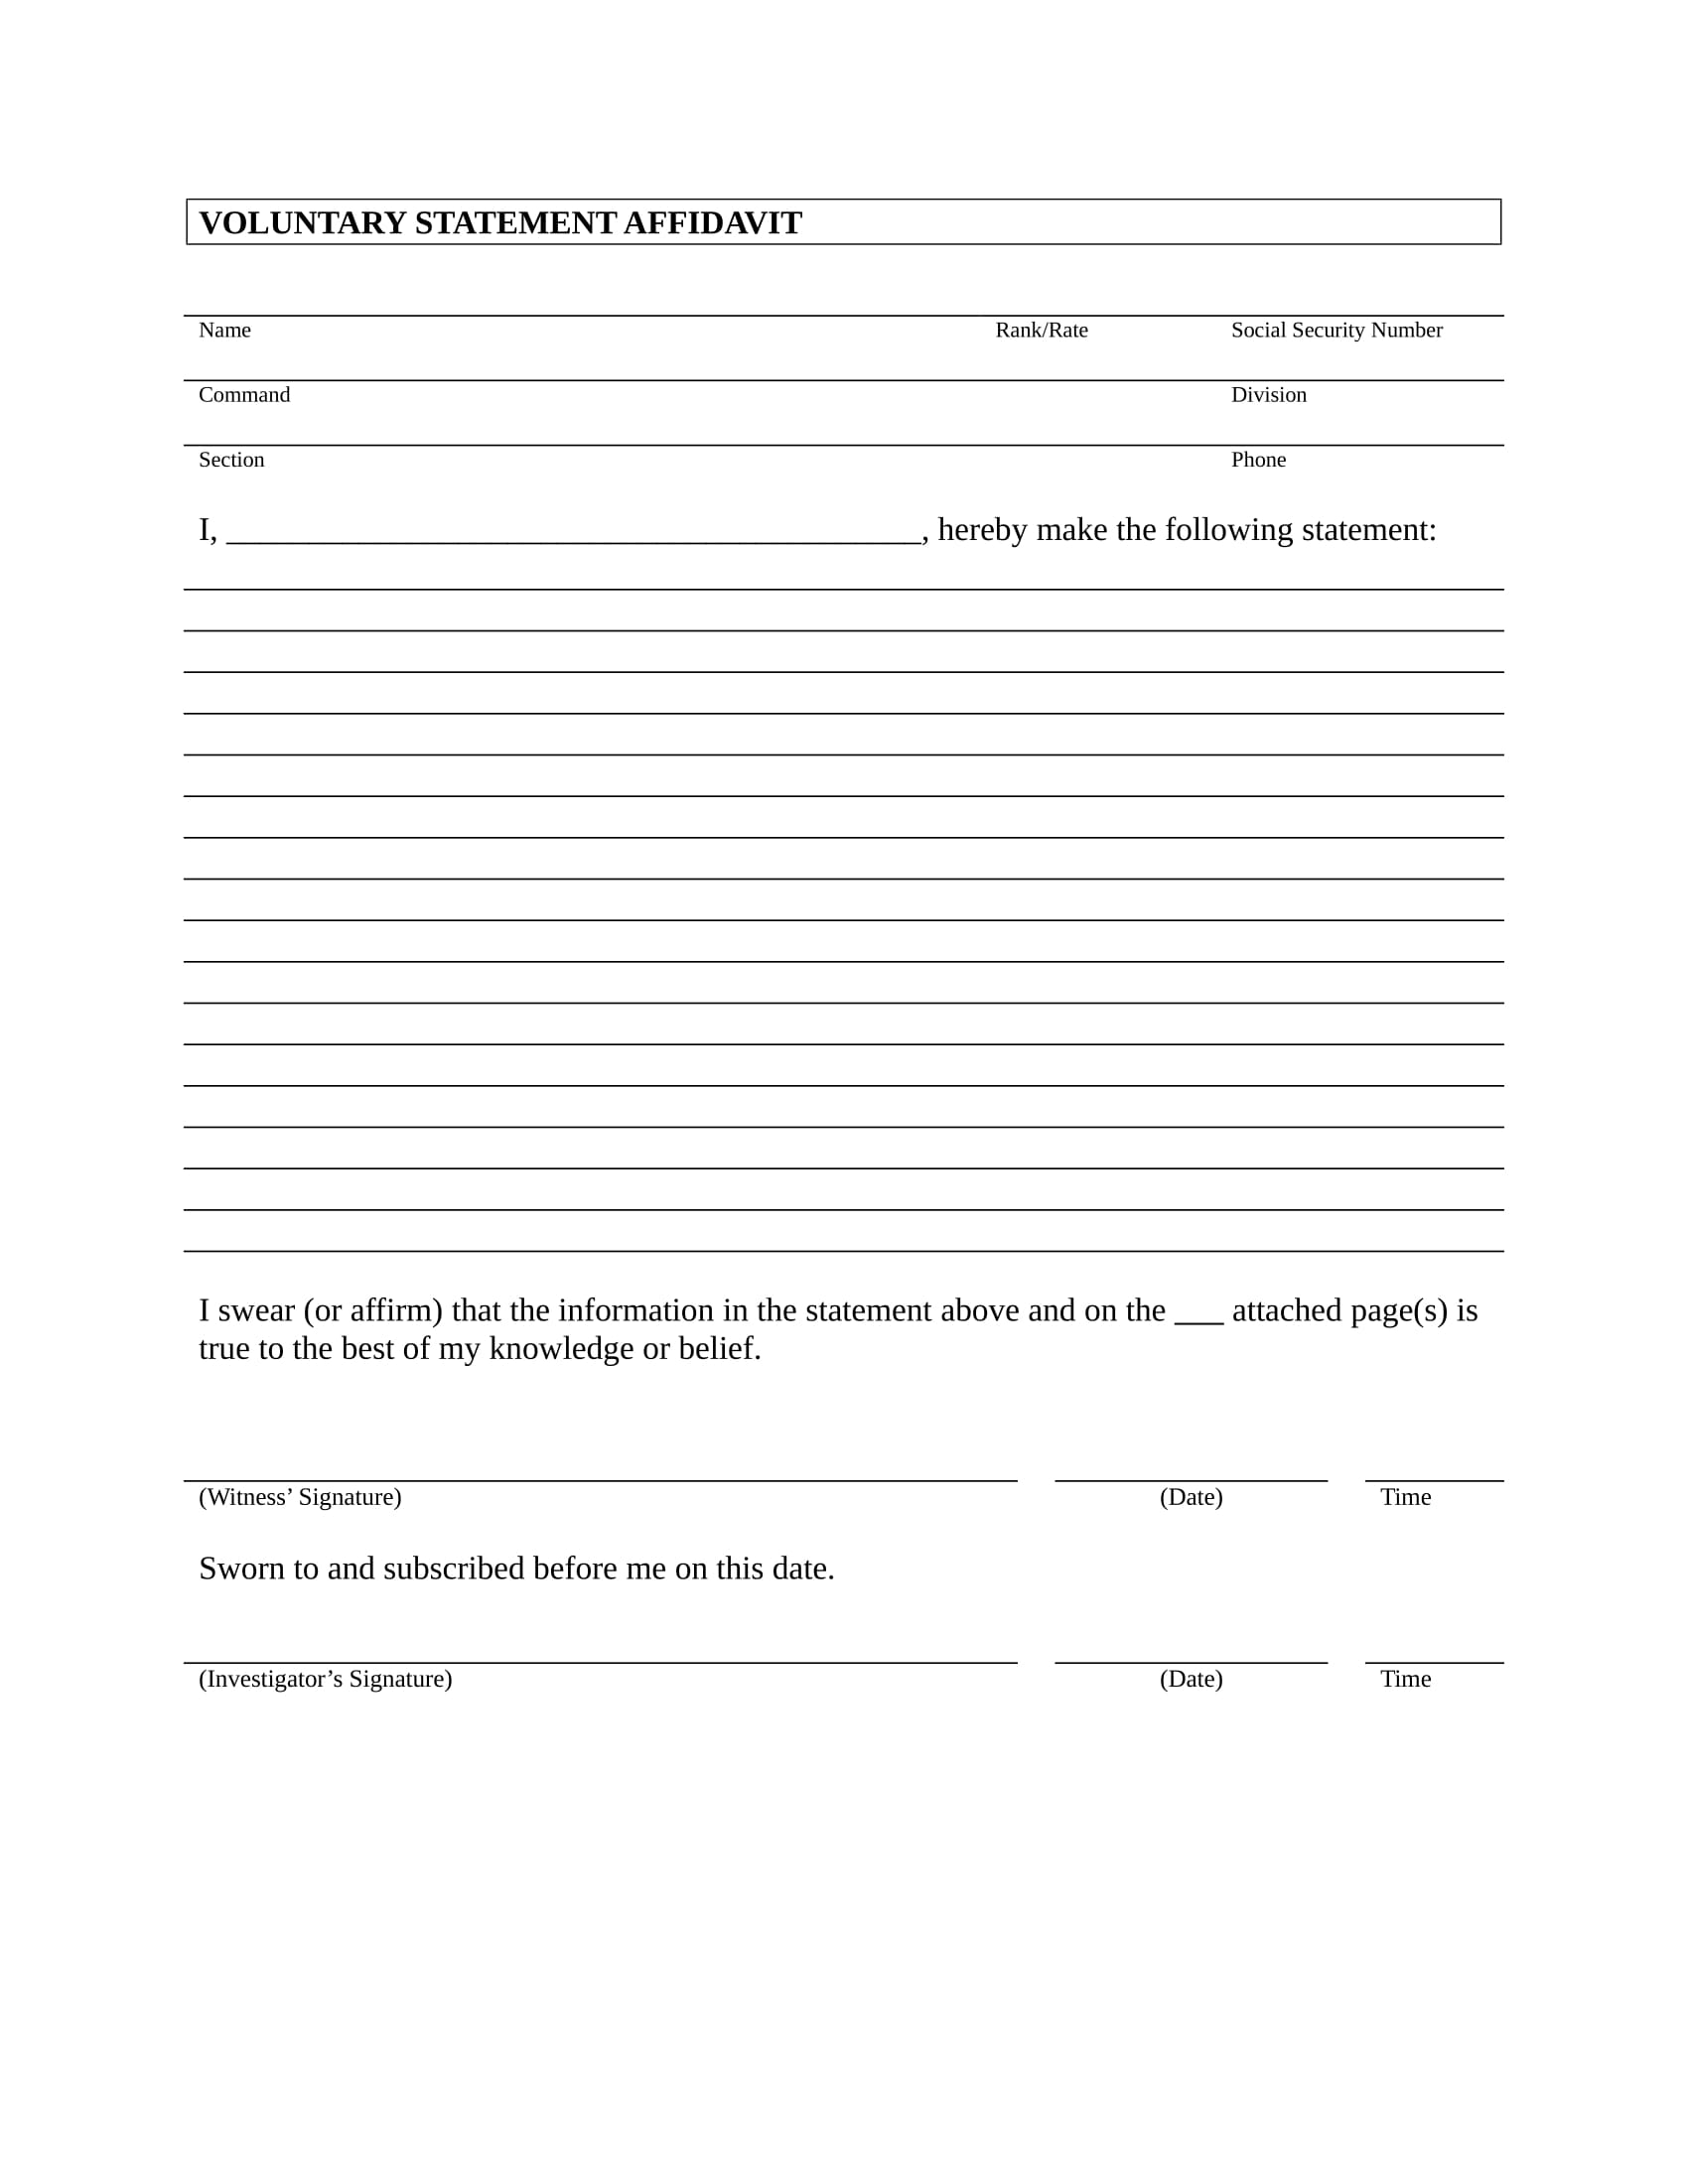 voluntary statement affidavit form sample 1